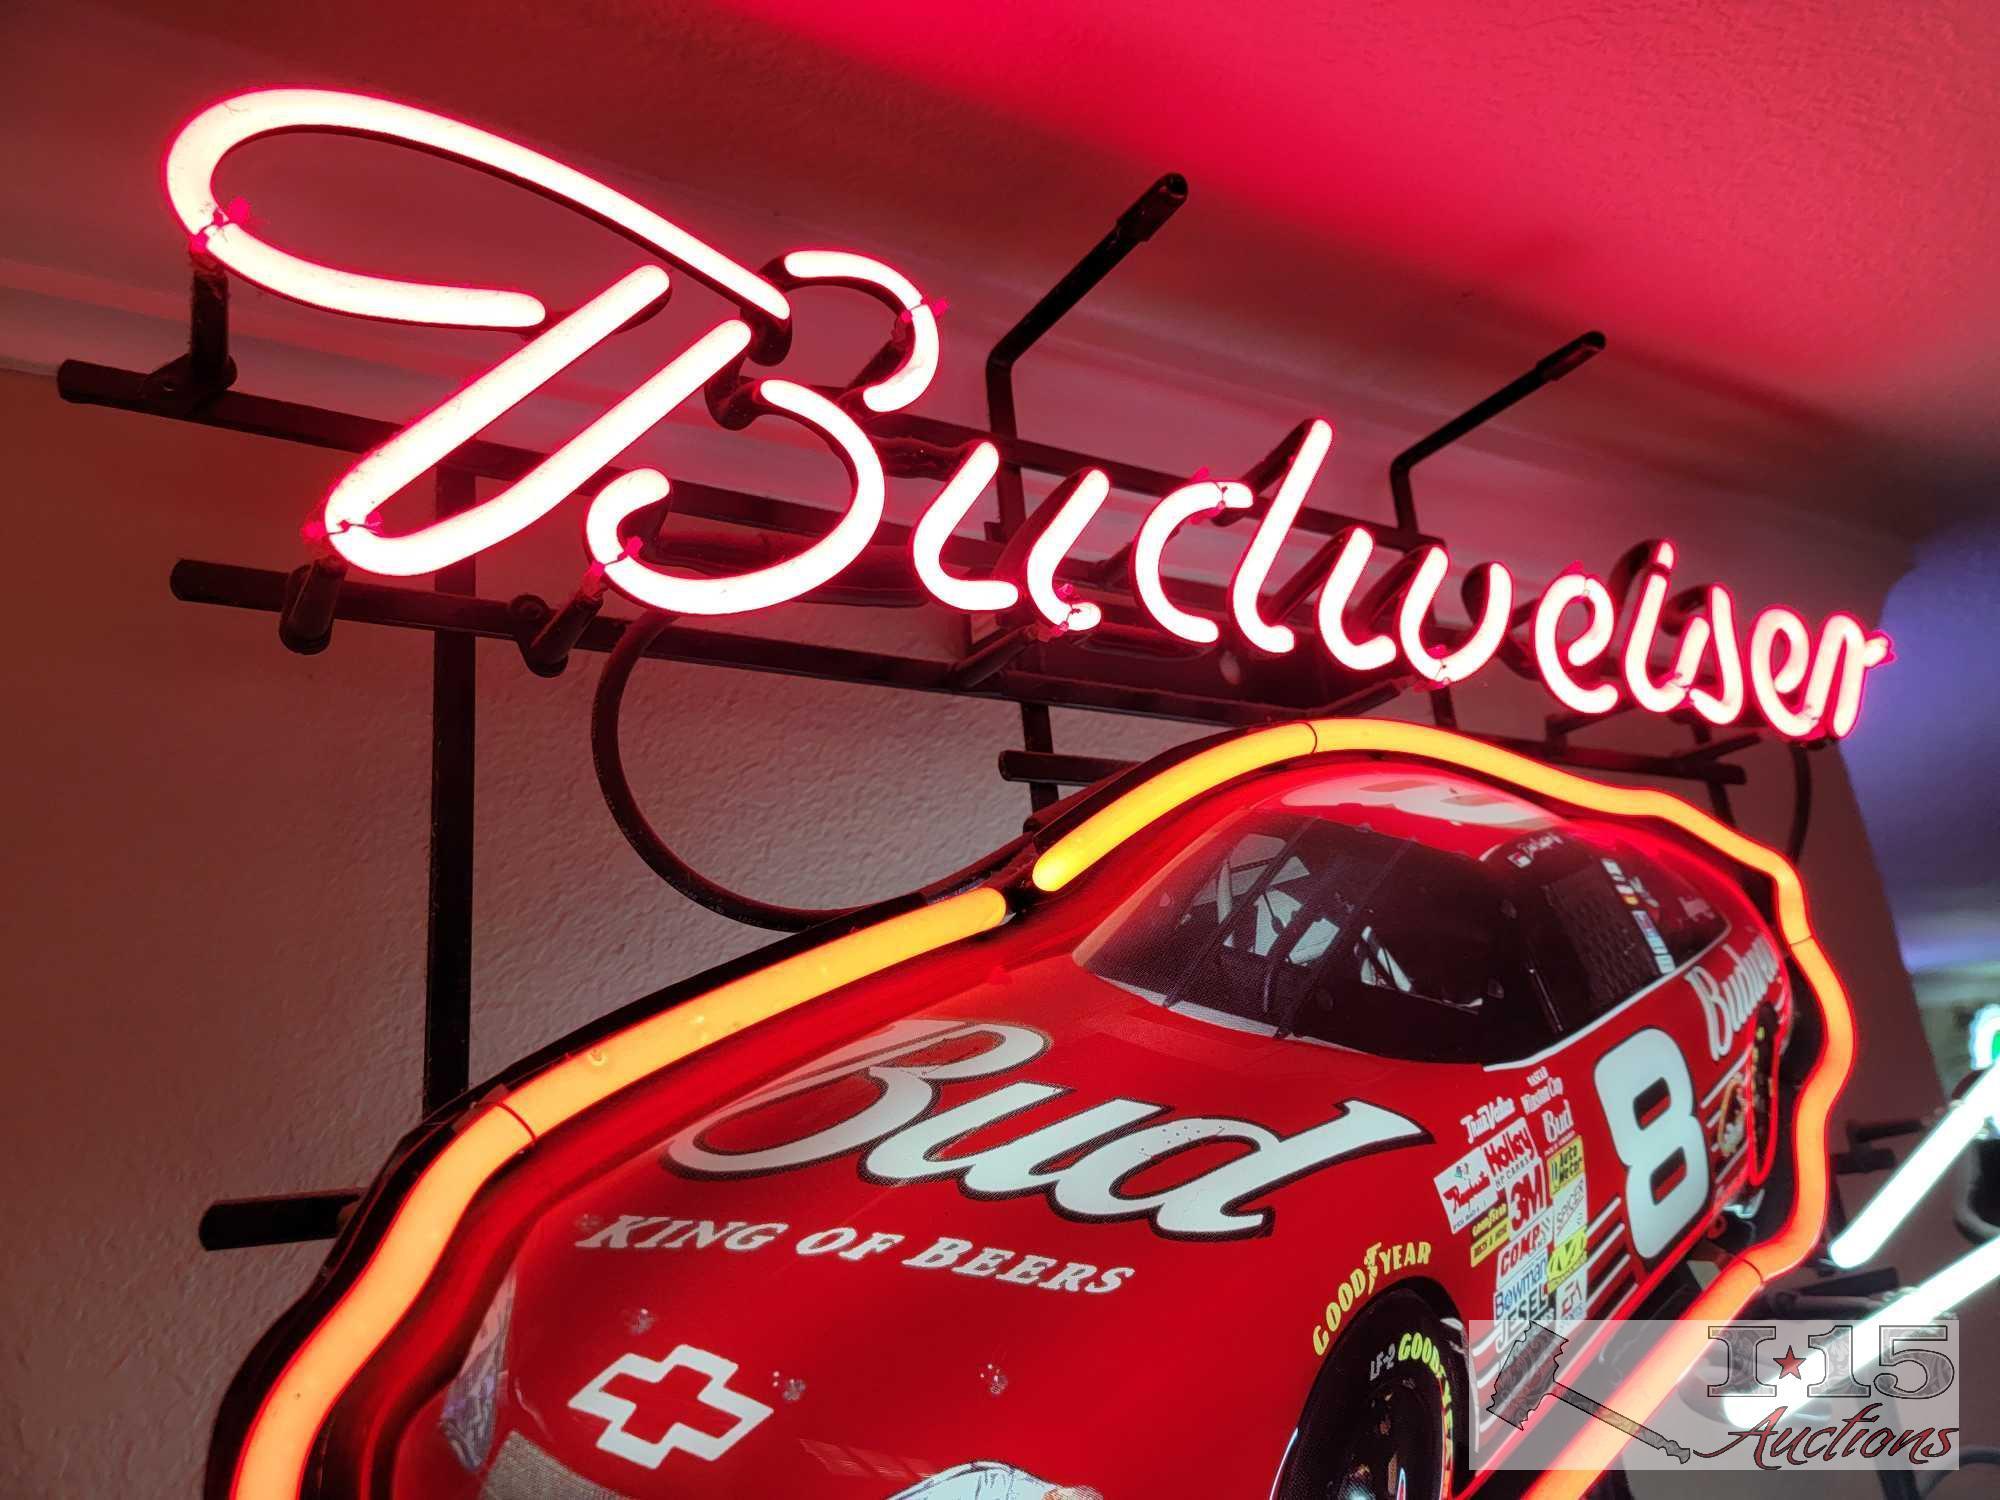 Budweiser Dale Earnhardt Jr, California Welcomes Nascar Neon Sigh